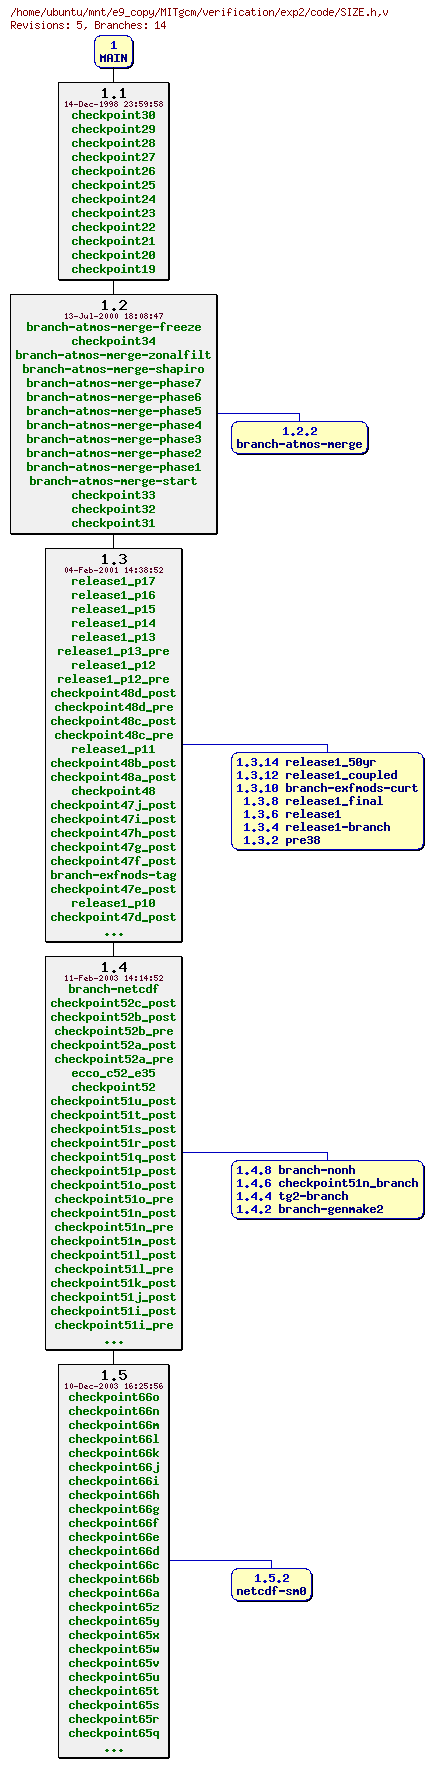 Revisions of MITgcm/verification/exp2/code/SIZE.h